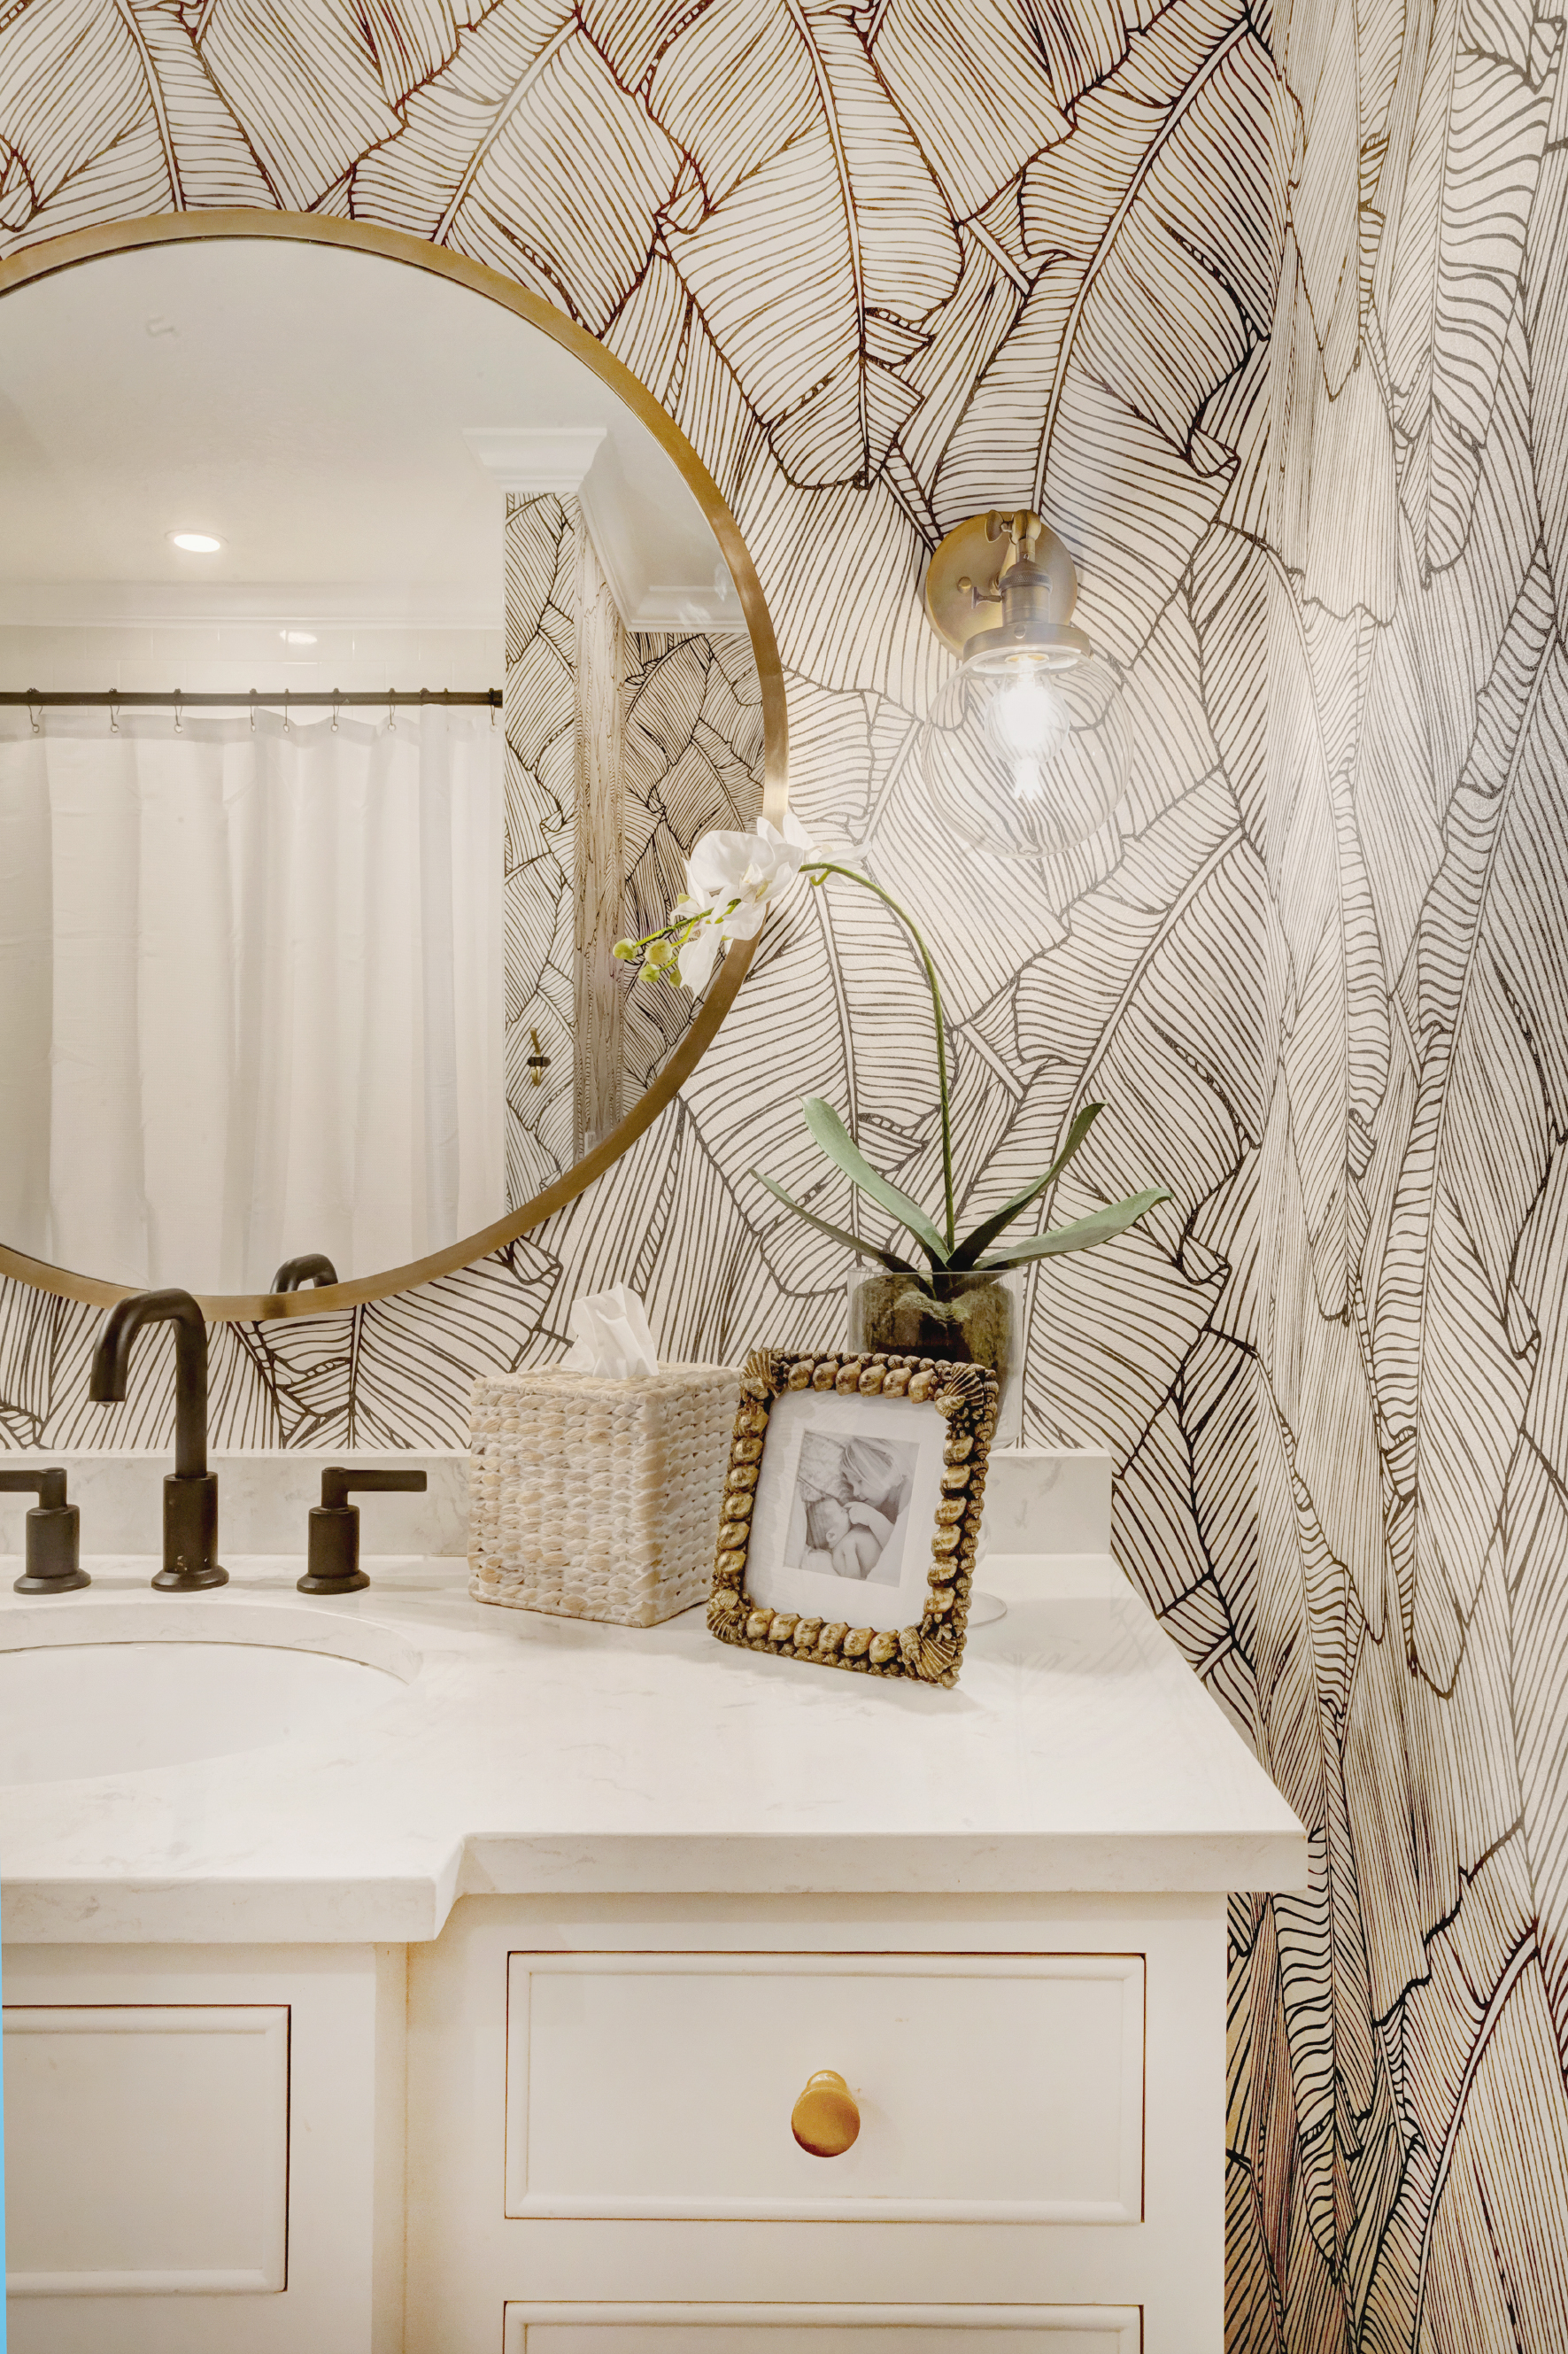 Palm Leaf Wallpaper Bathroom by Designer Nicki Pasqualone, Sponsored by Walls Republic